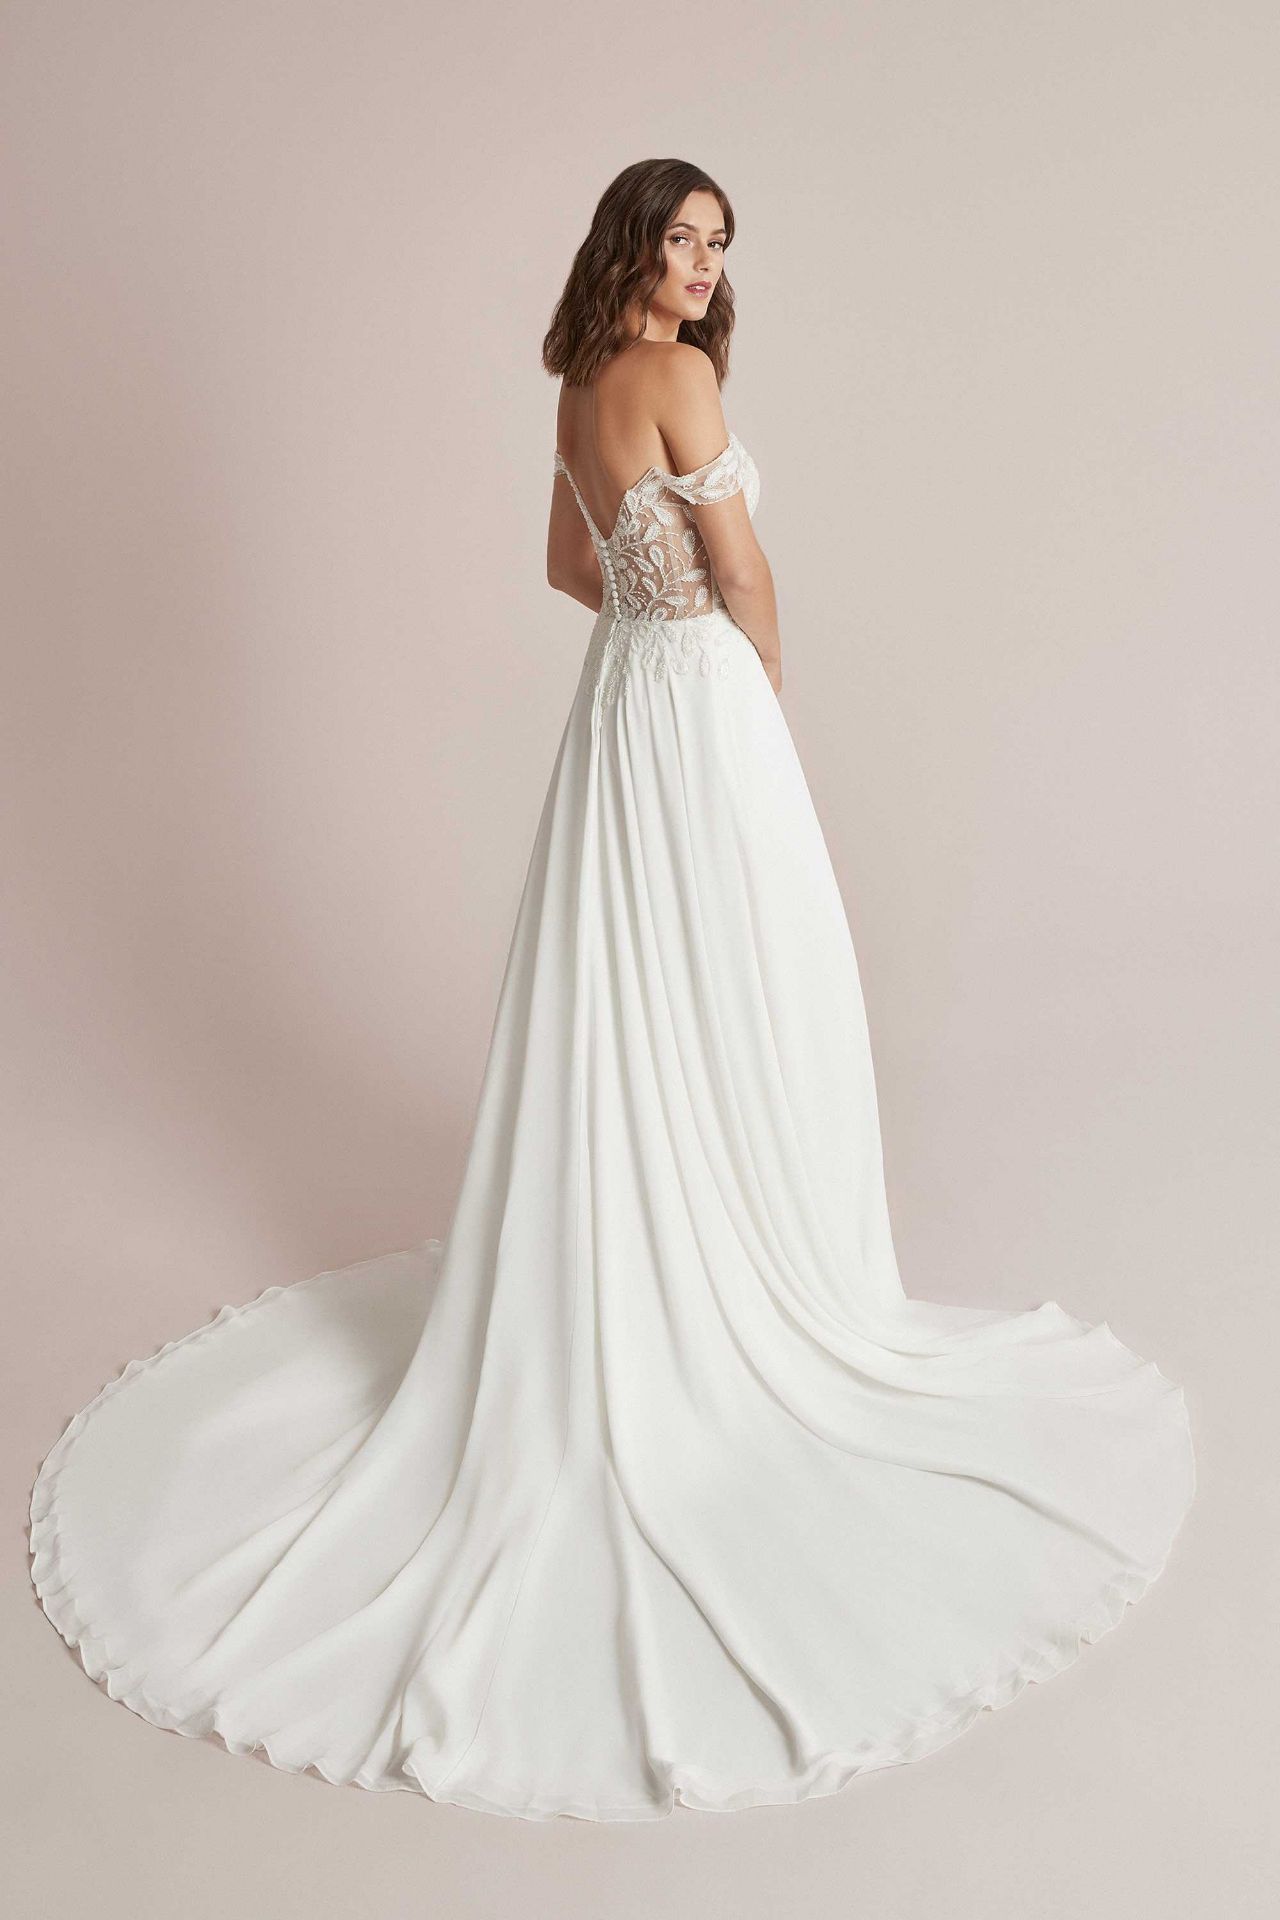 1 x Justin Alexander 'Carina' Off-The-Shoulder Chiffon A-Line Wedding Dress - Size 20 - RRP £1,675 - Image 3 of 4